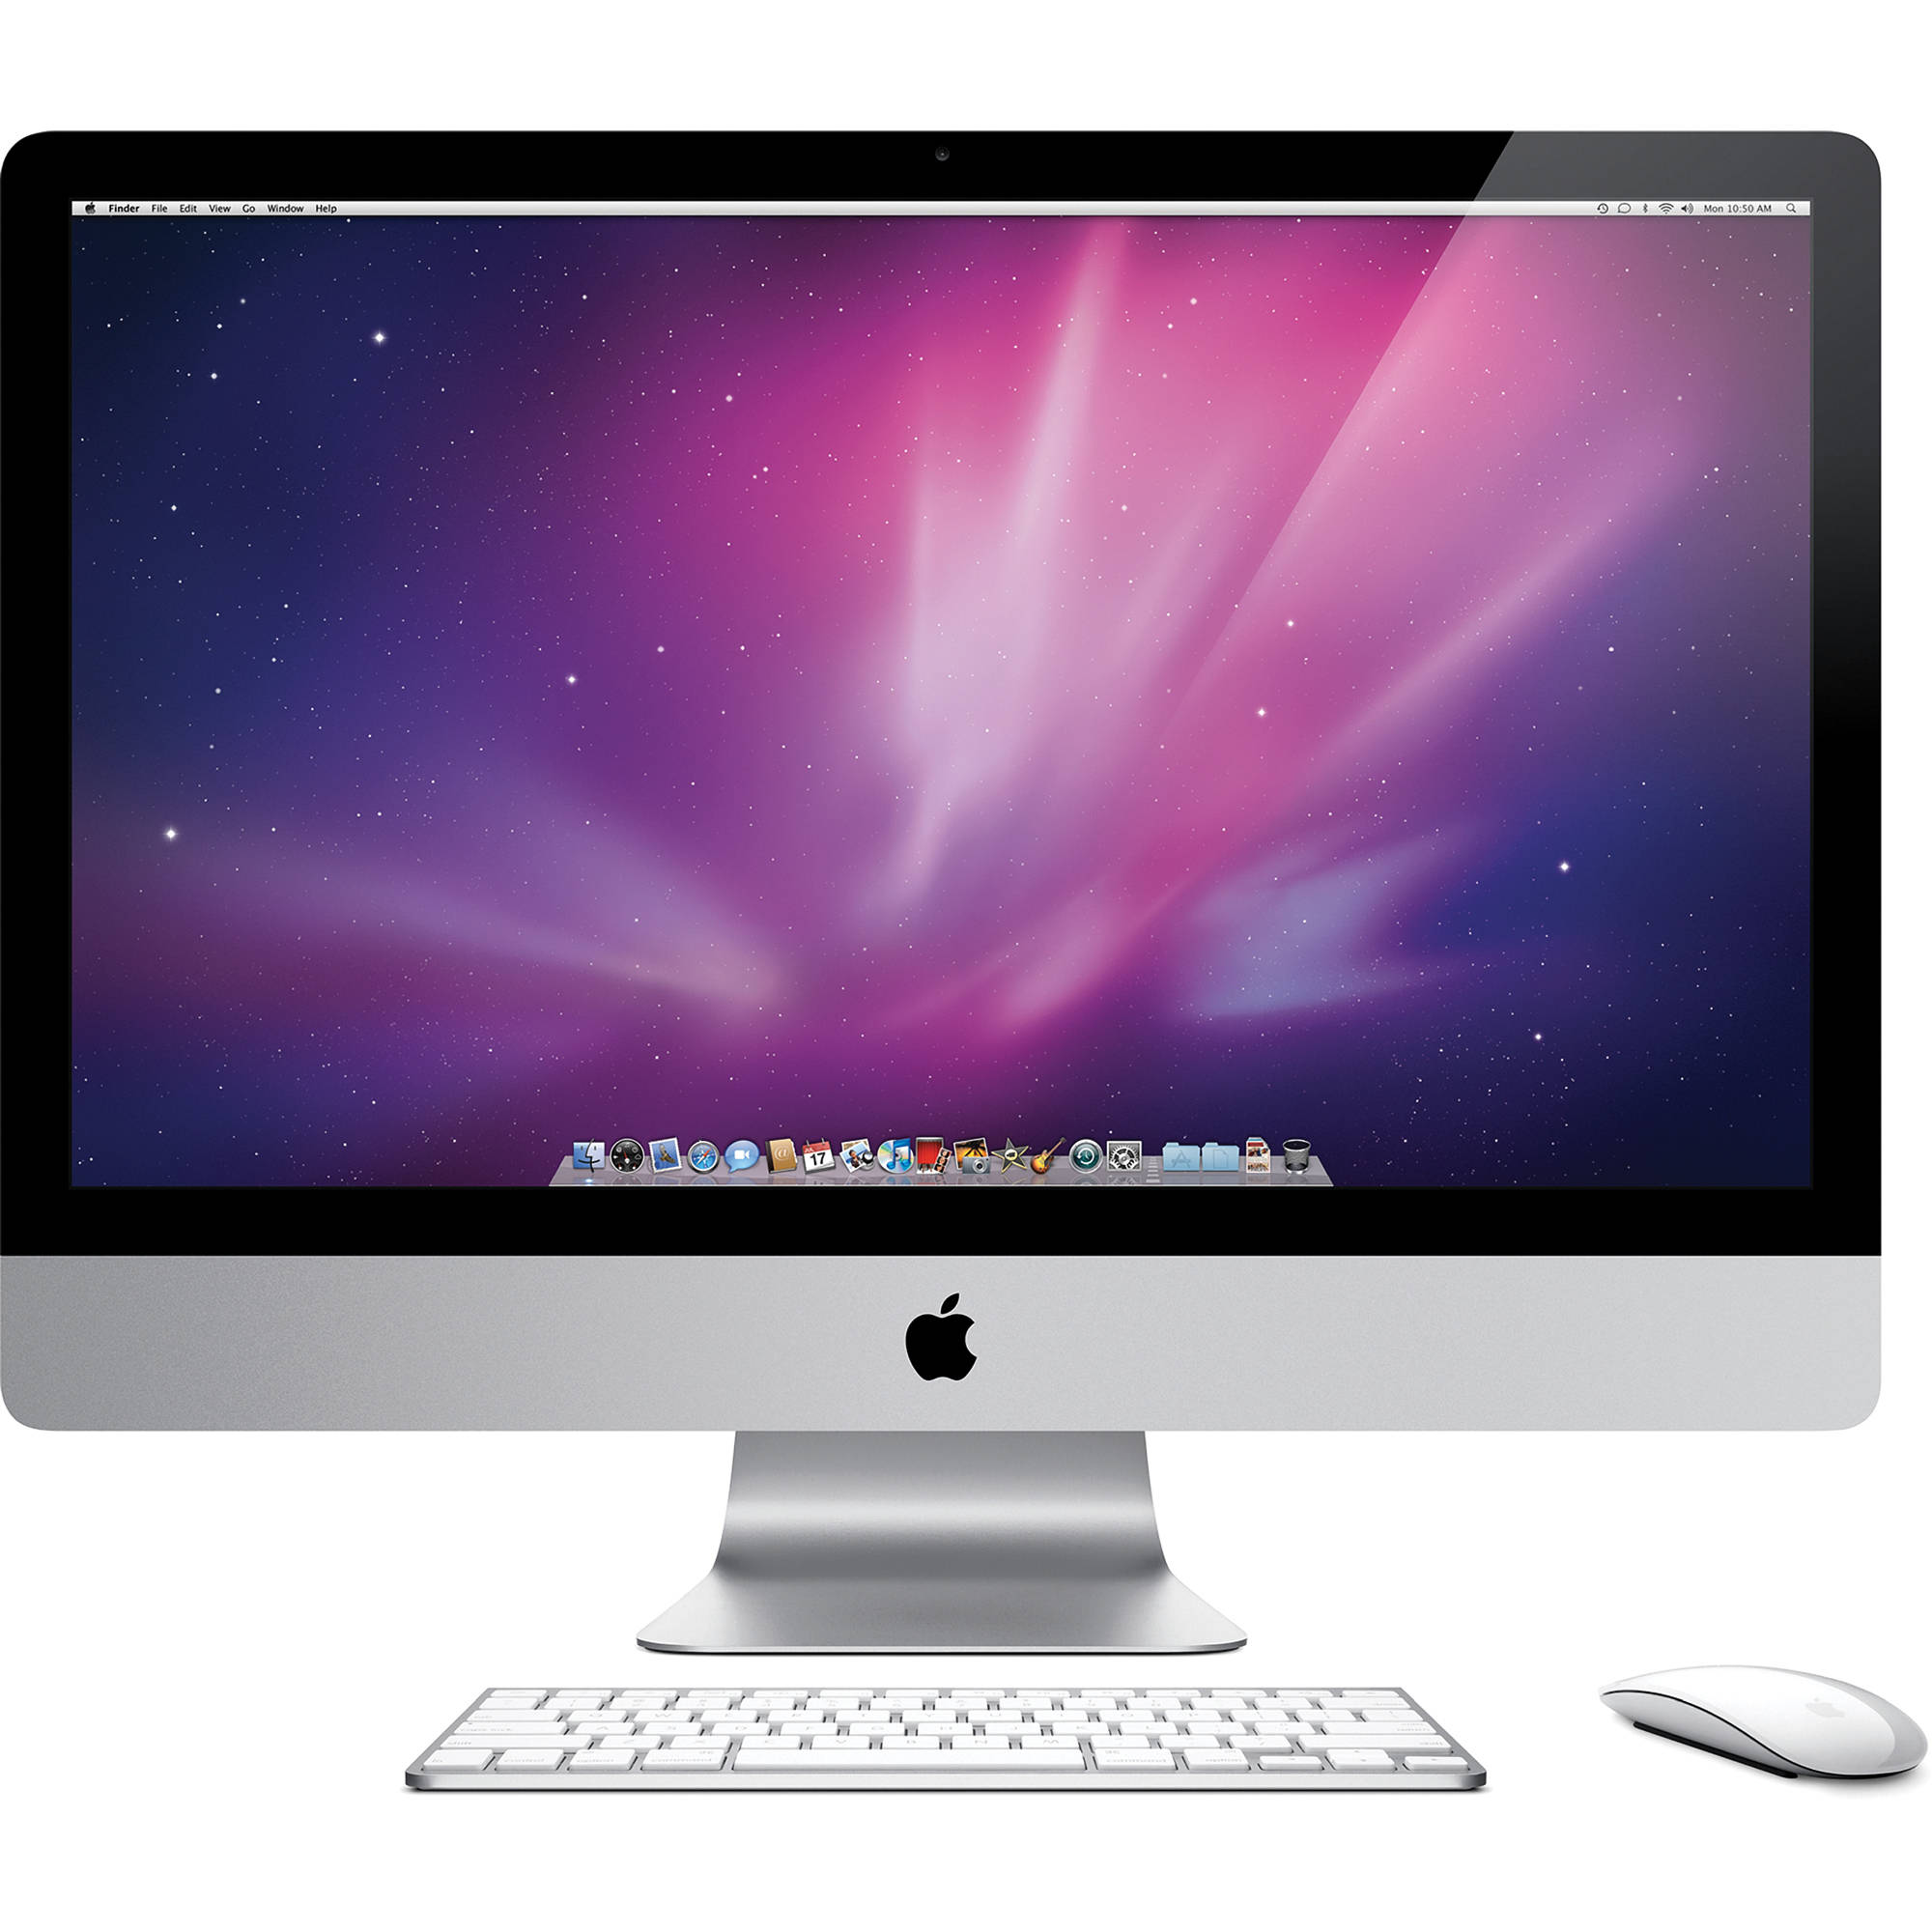 chromecast for mac laptop download